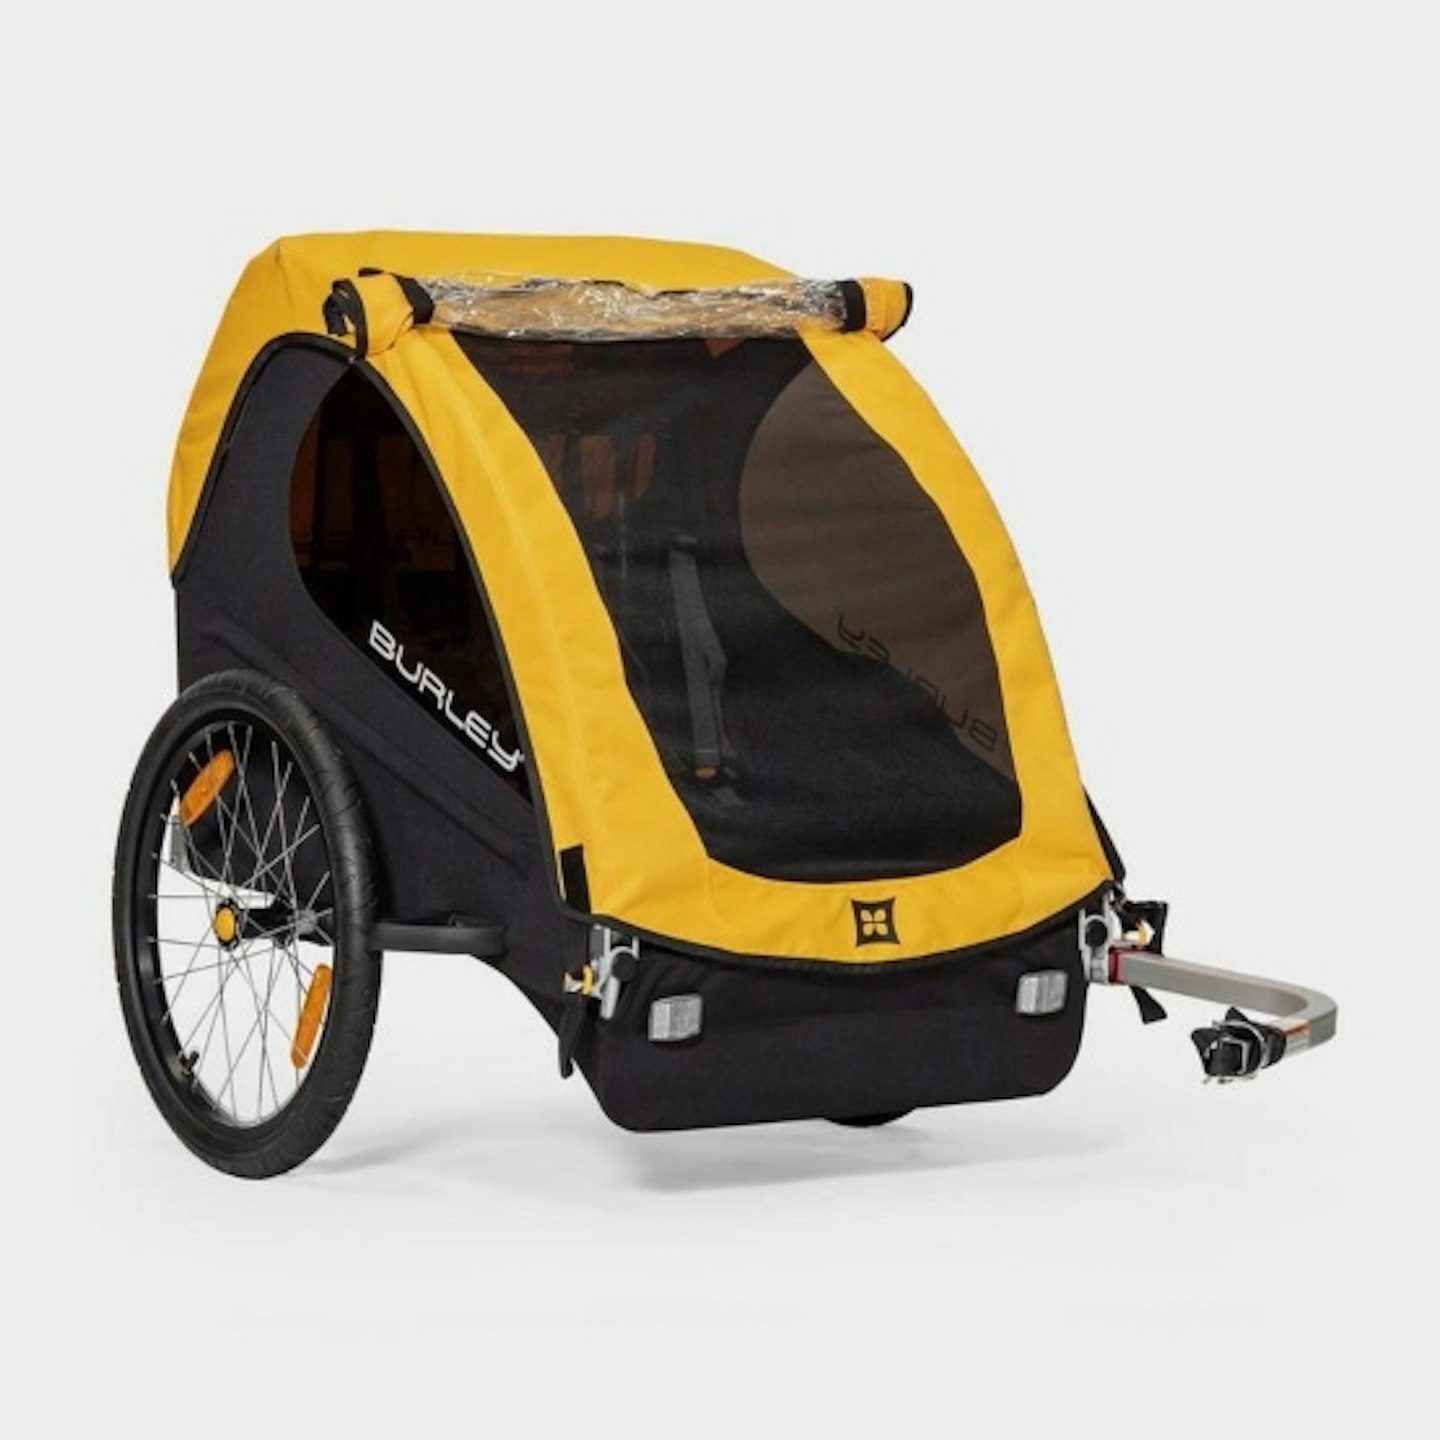 Burley Bee single seater bike trailer